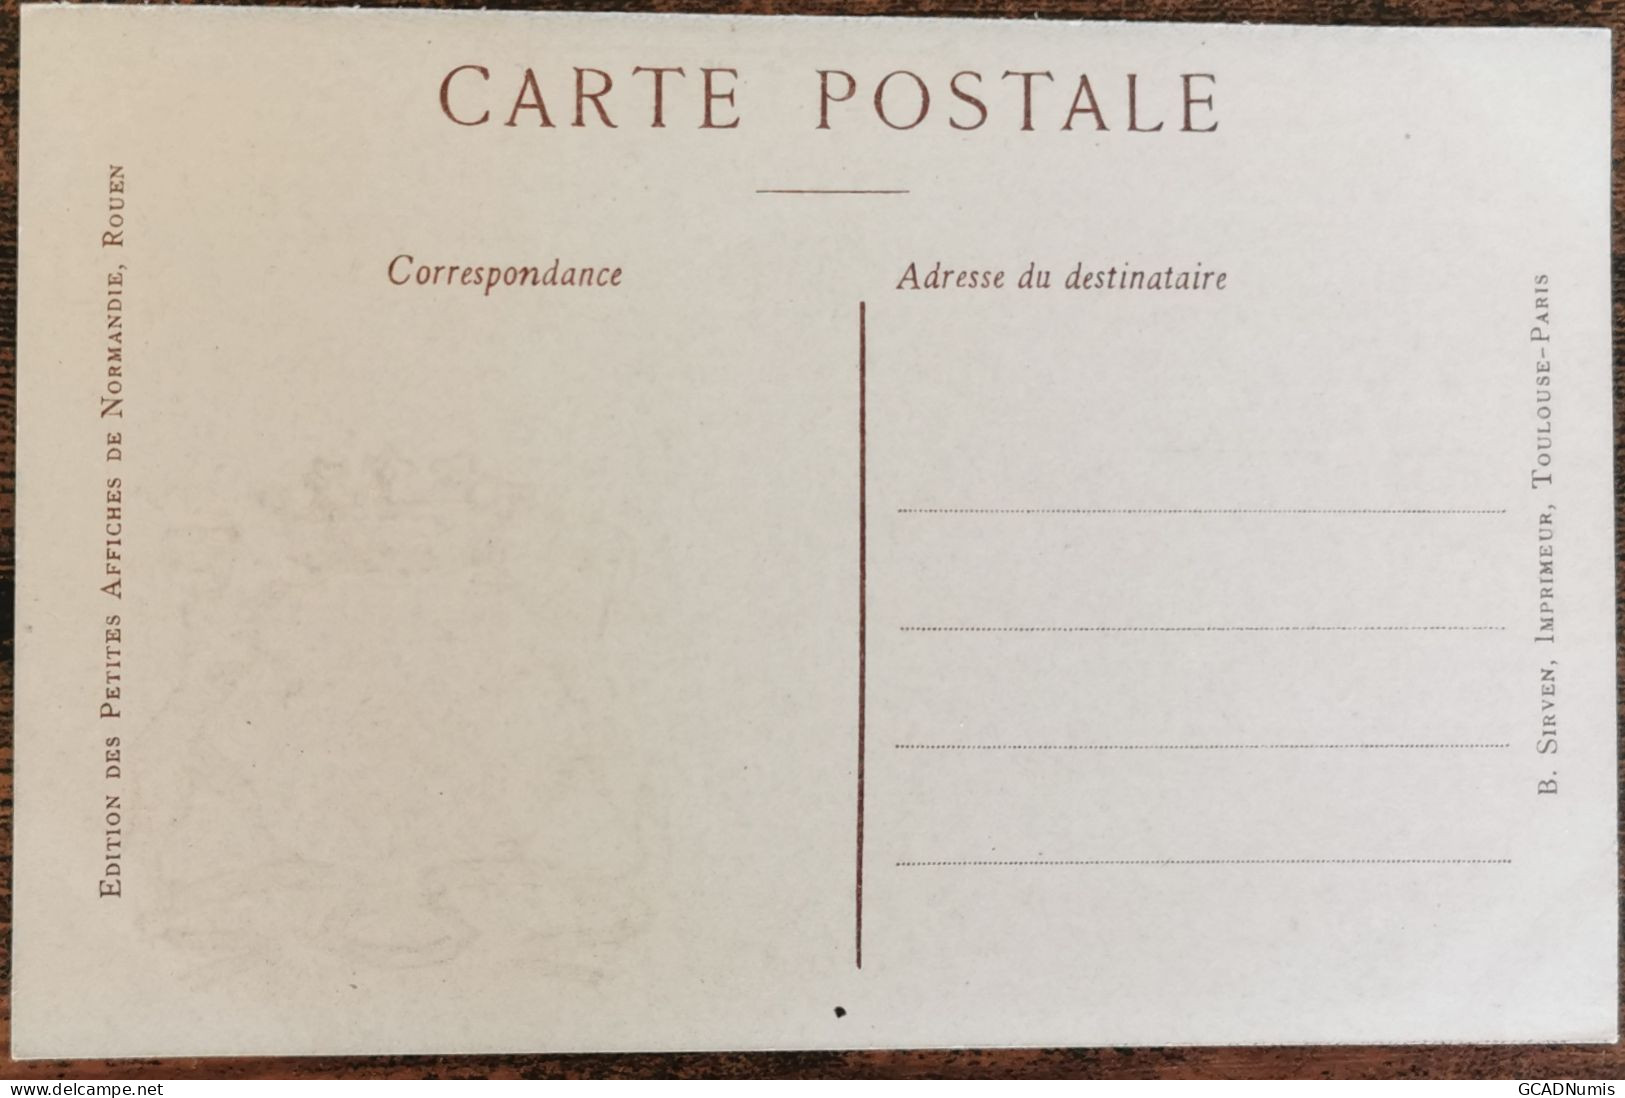 CARTE POSTALE Billet 1 Franc Chambre De Commerce De CHAMBERY - Savoie - Chambery